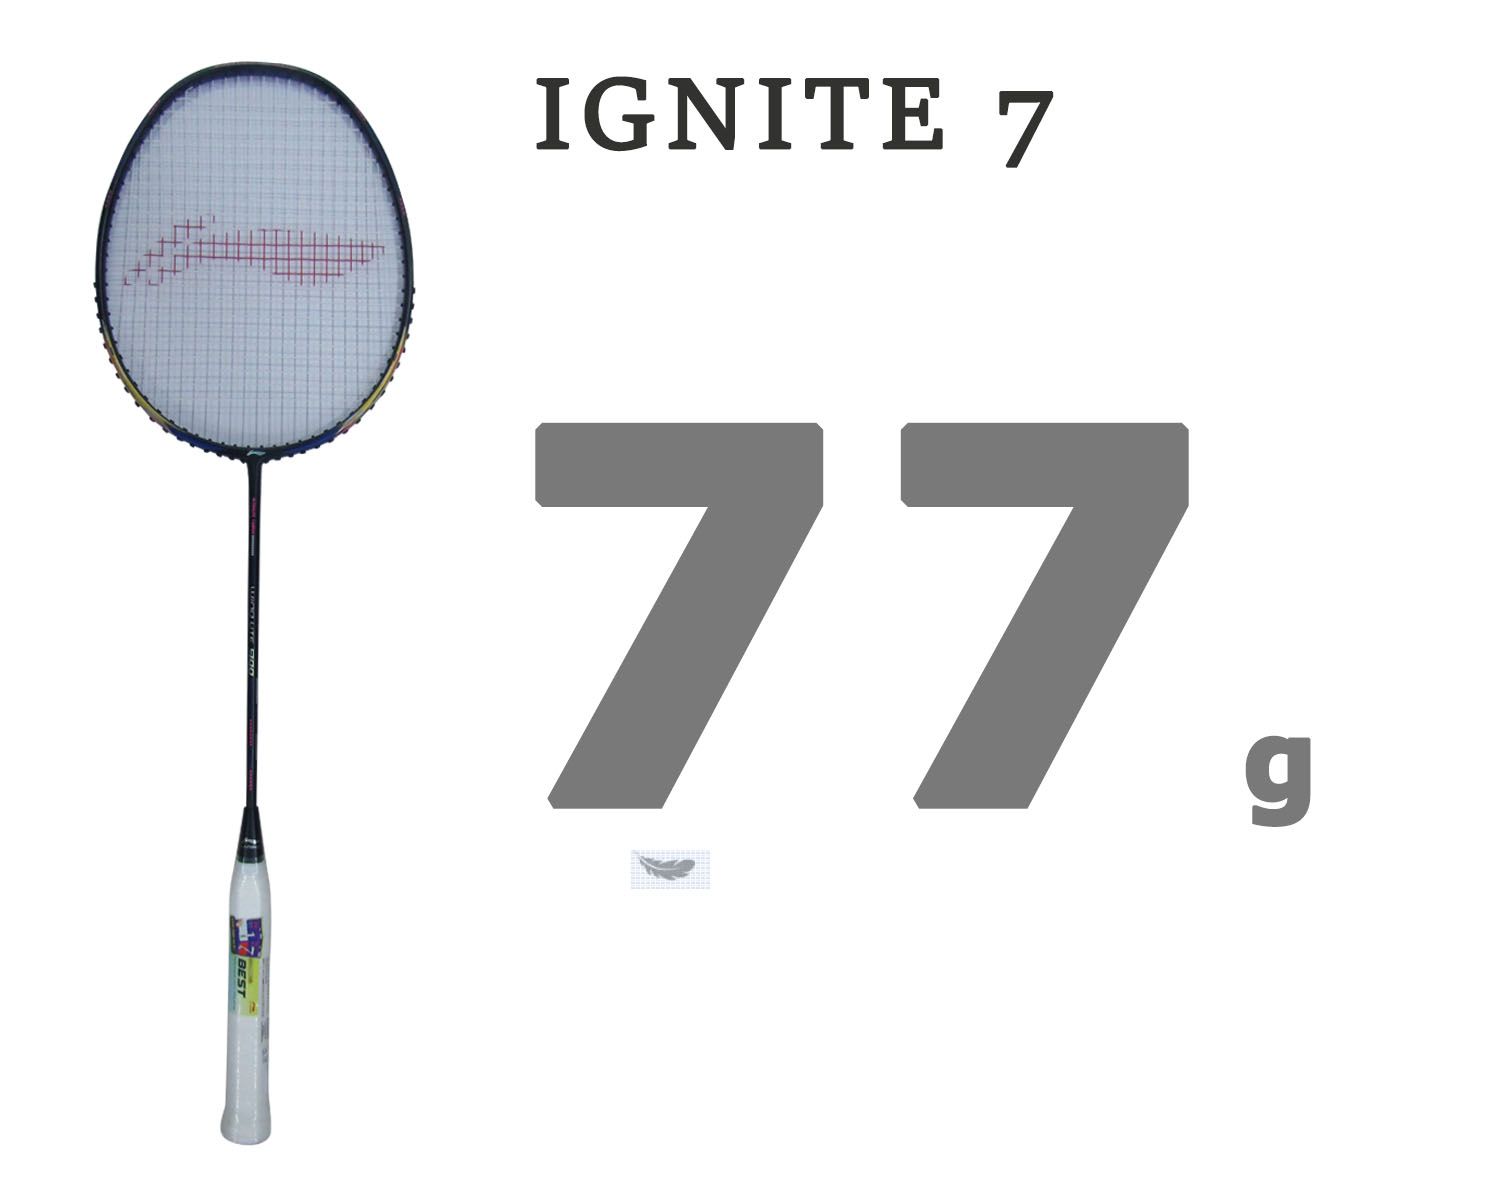 Li Ning IGNITE 7 Badminton Racket